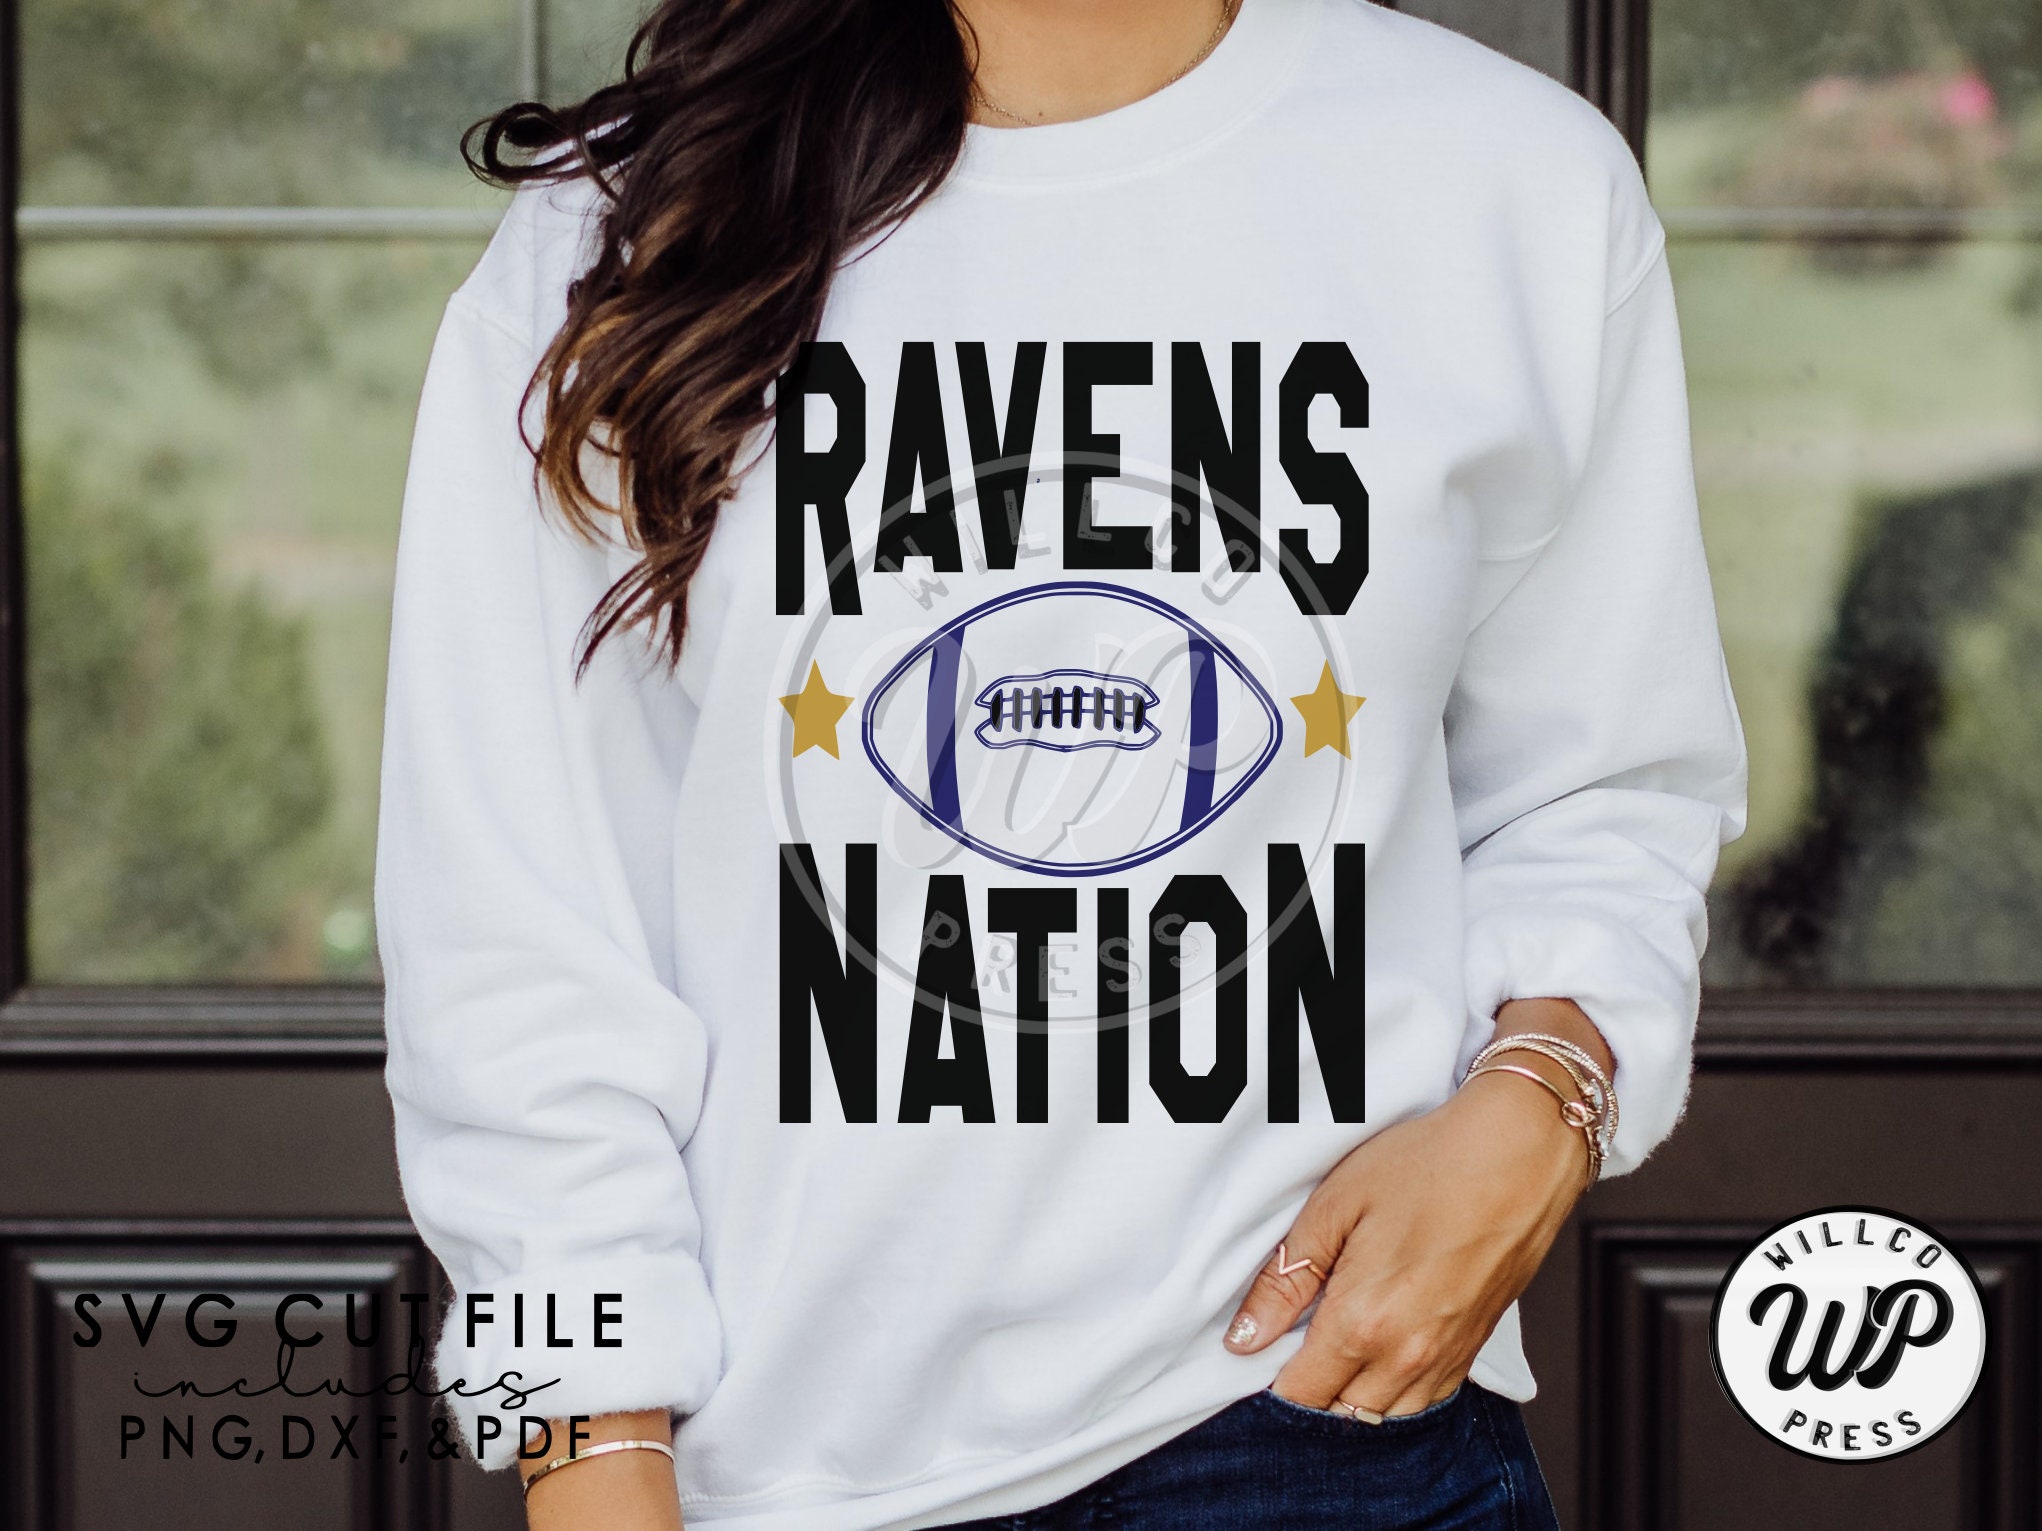 Ravens Nation, Football svg, png, dxf, svg files for cricut, shirt svgs,  sublimination, vinyl cut file, silouhette